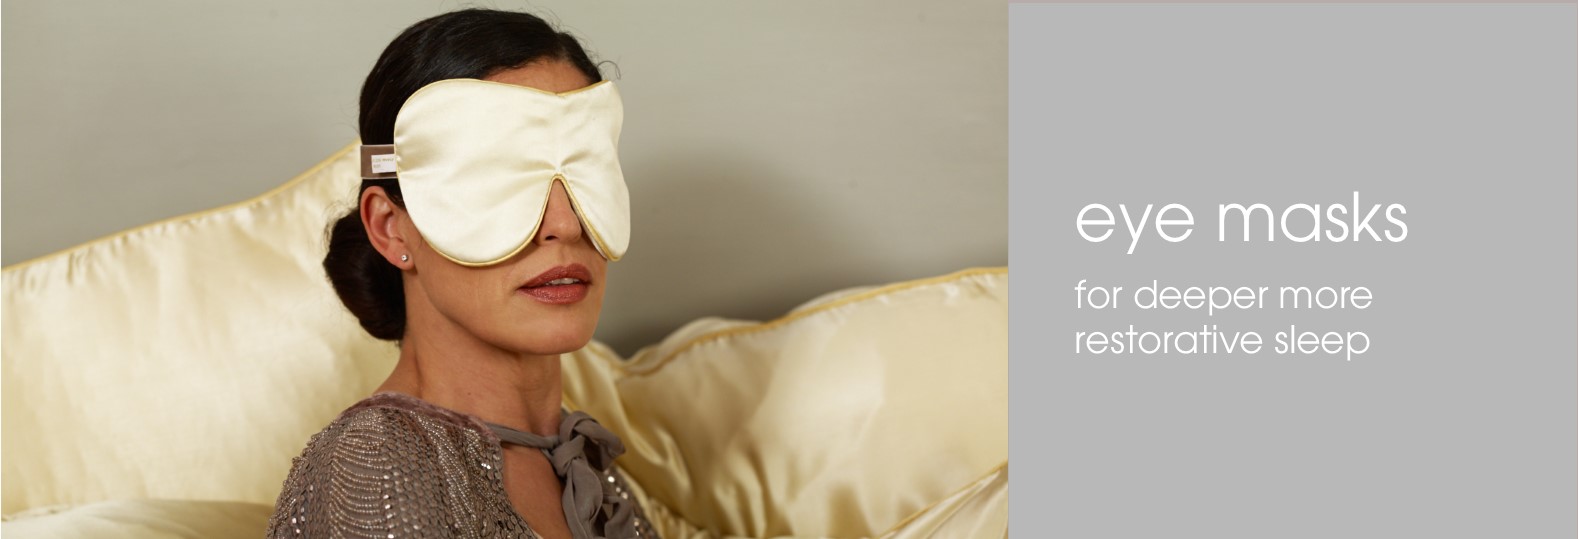 mulberry silk sleeping eye mask